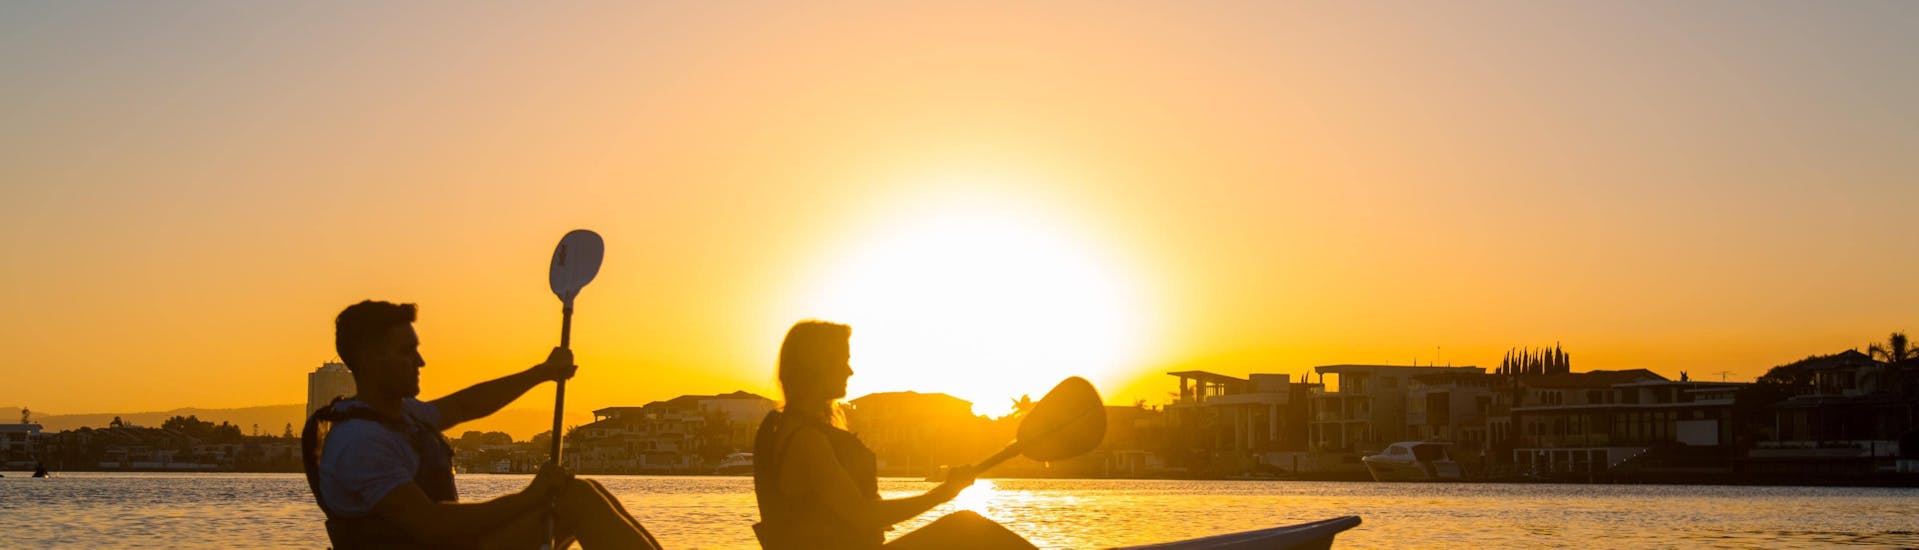 A couple is enjoying the Kayaking on the Gold Coast around Surfers Paradise at sunset organised by Australian Kayaking Adventures.